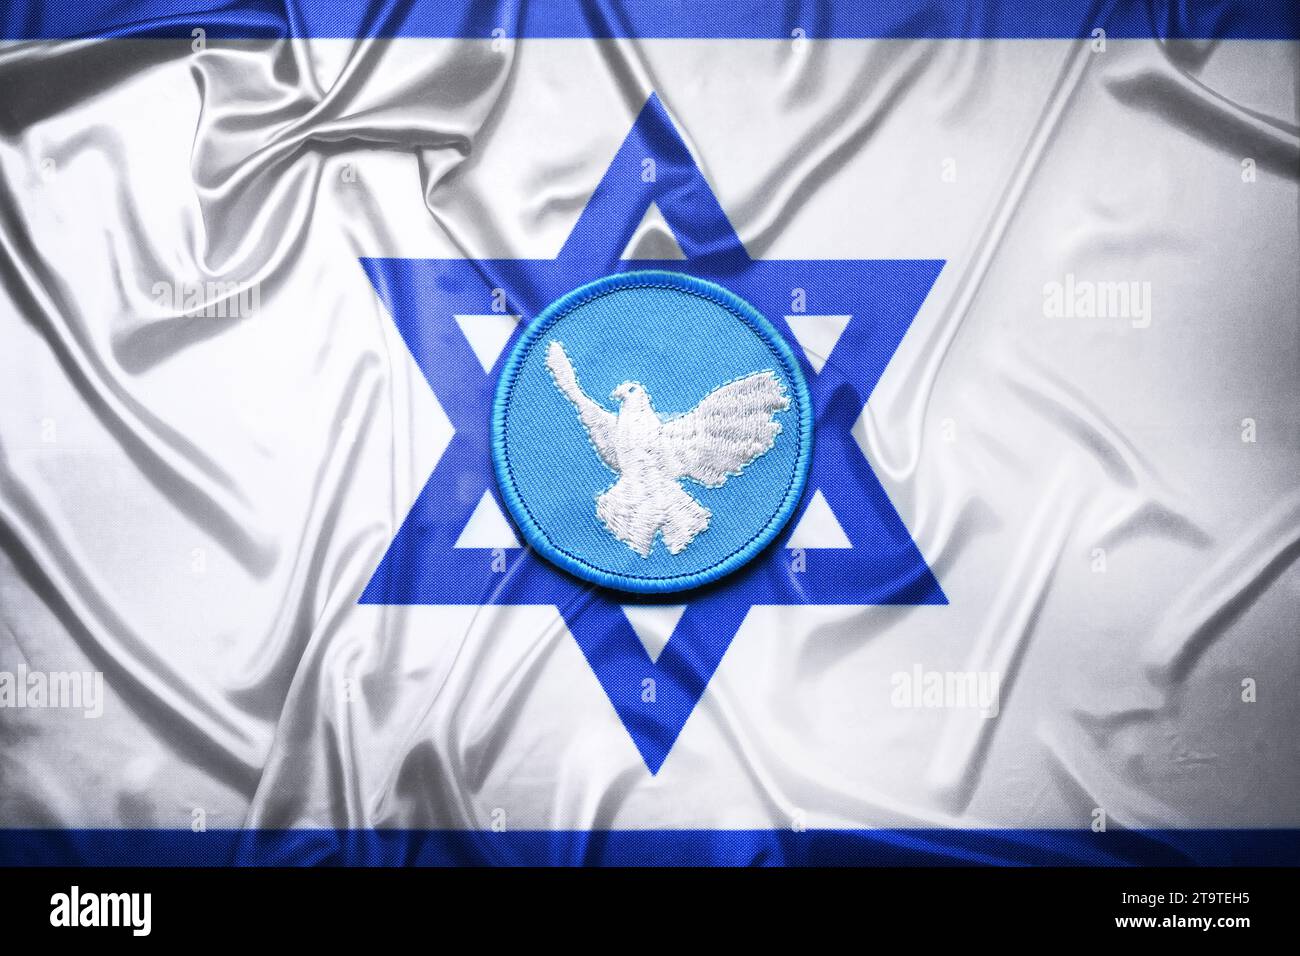 https://c8.alamy.com/comp/2T9TEH5/fahne-von-israel-mit-friedenssymbol-nahostkonflikt-und-friedensbemhungen-flag-of-israel-with-peace-symbol-middle-east-conflict-and-peace-efforts-credit-imagoalamy-live-news-2T9TEH5.jpg